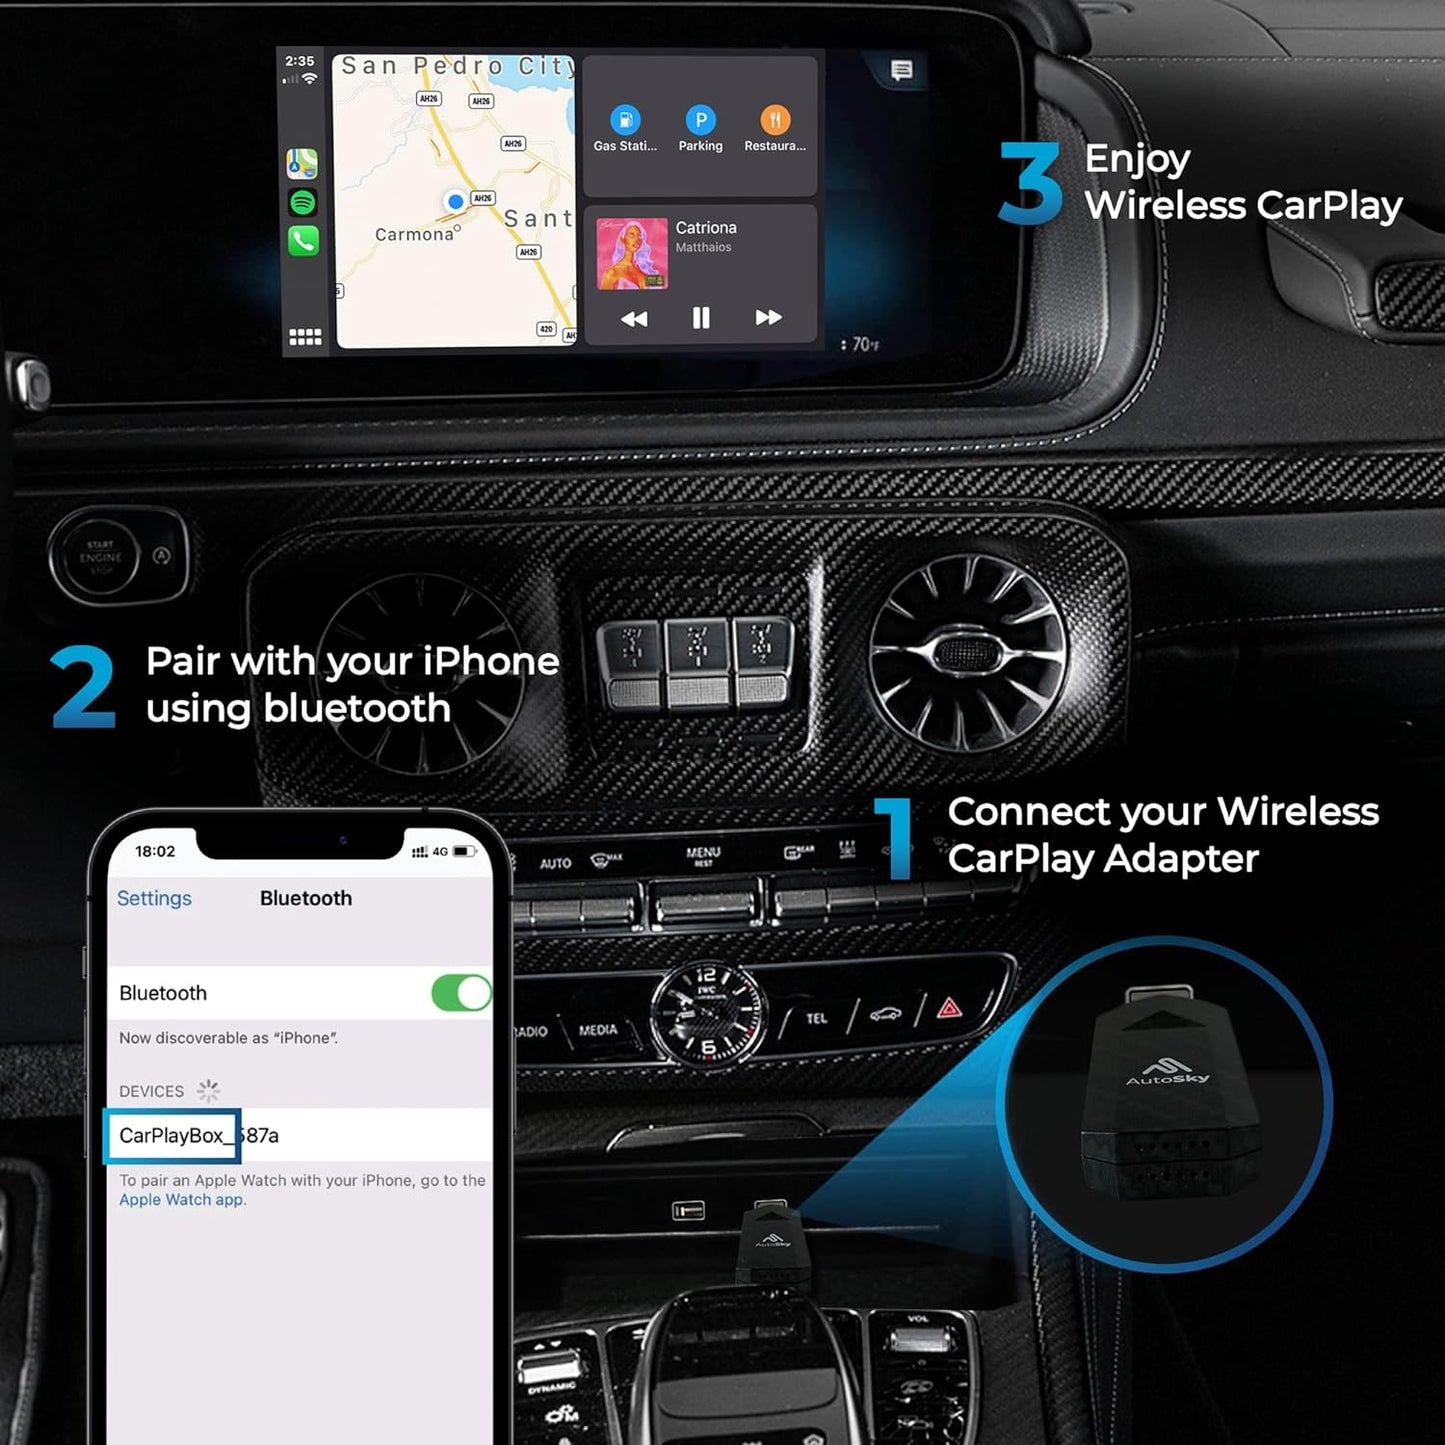 AutoSky Wireless CarPlay Adapter Pro Slim - Convierta su CarPlay con cable en CarPlay inalámbrico - Plug and Play WUA-4